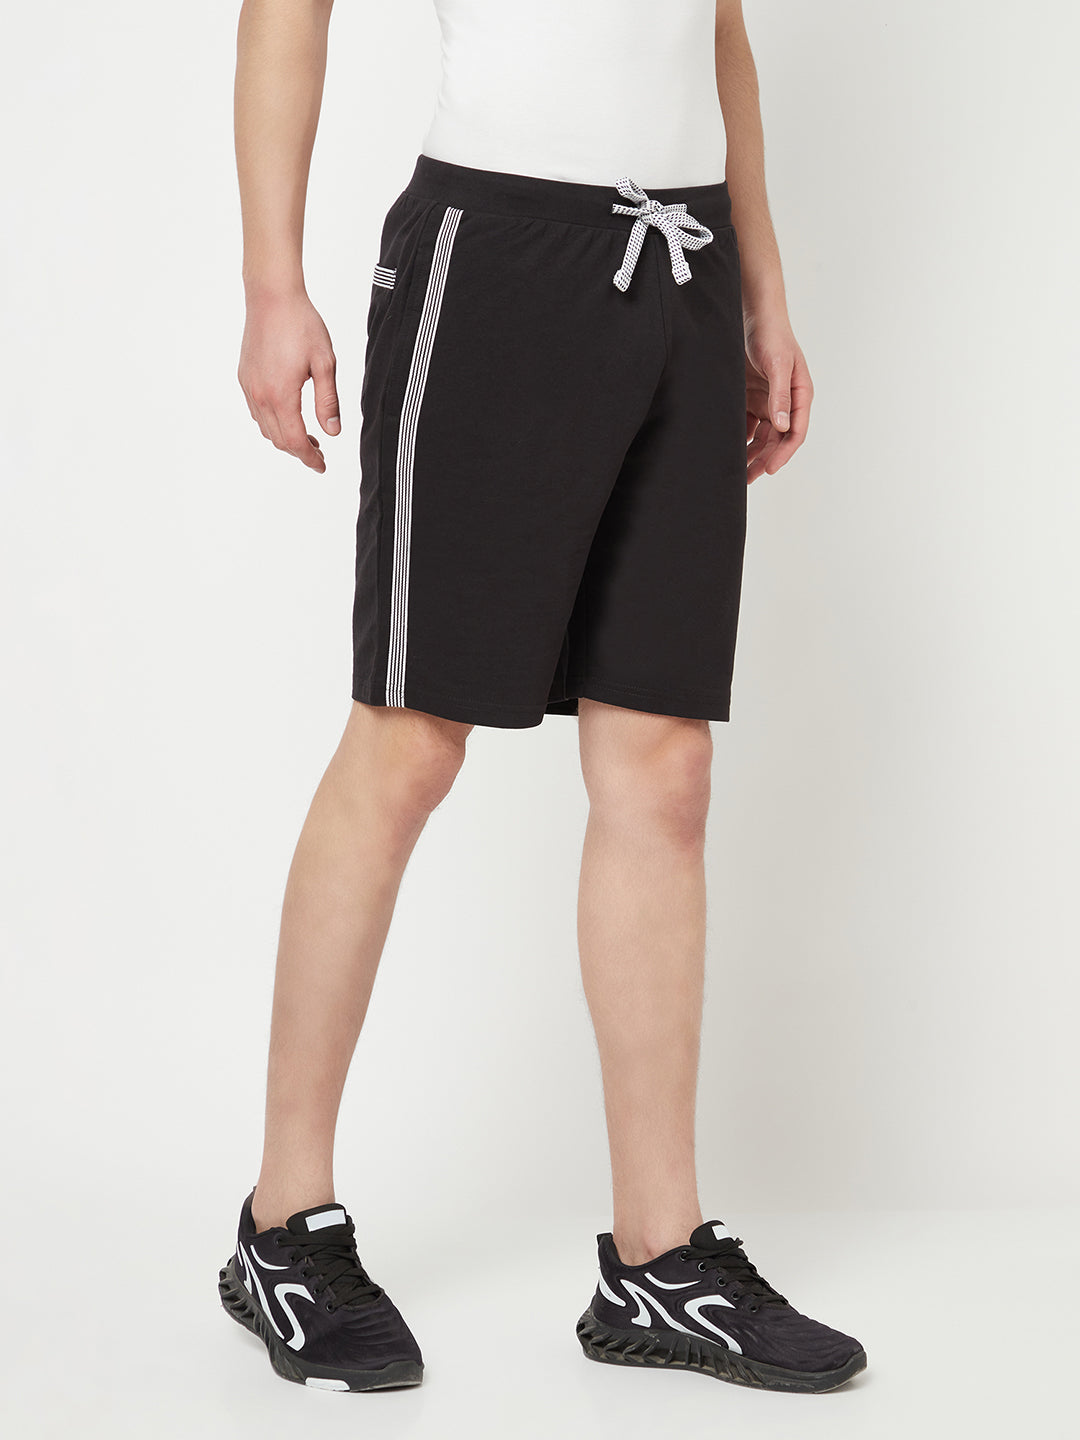 Black Printed Sports Shorts - Men Shorts